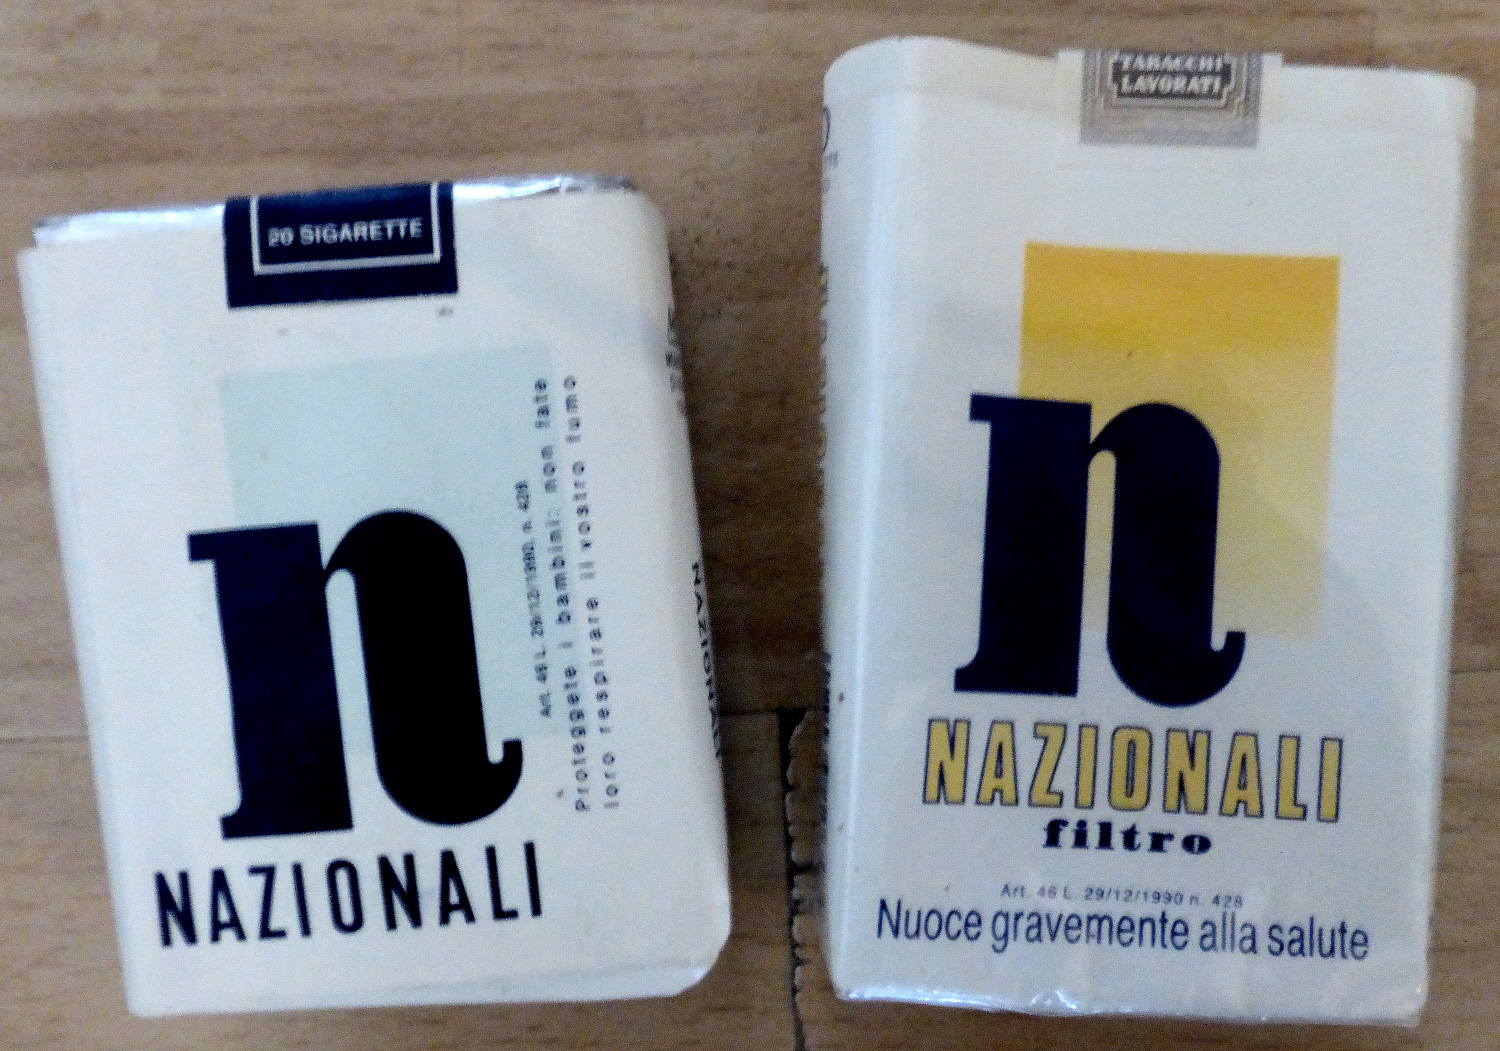 7q-Nazionali-Zigaretten